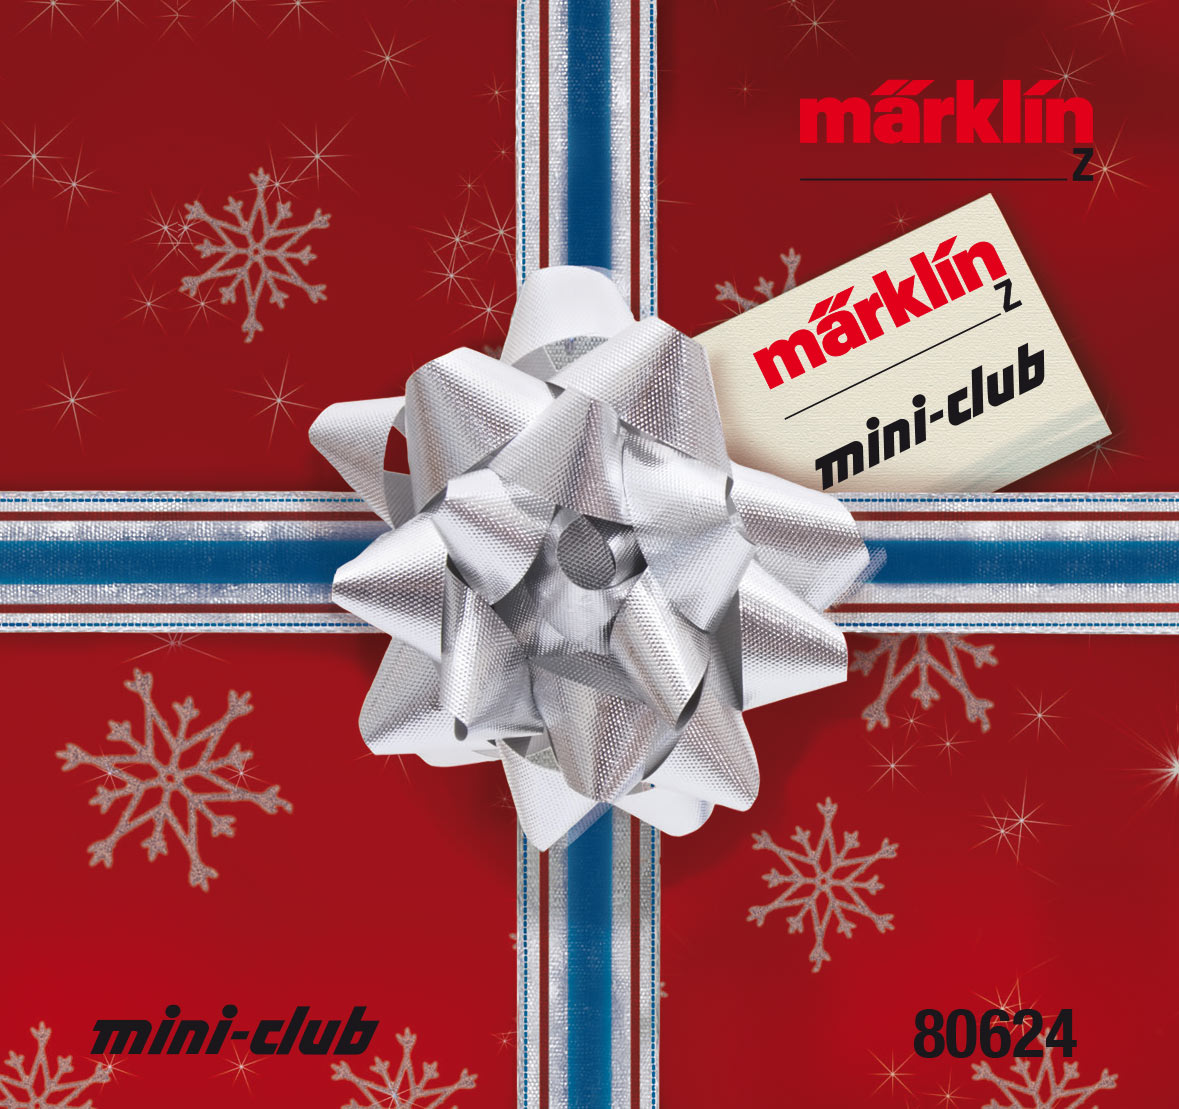 Maerklin Mini Club Spur Z Startpackung